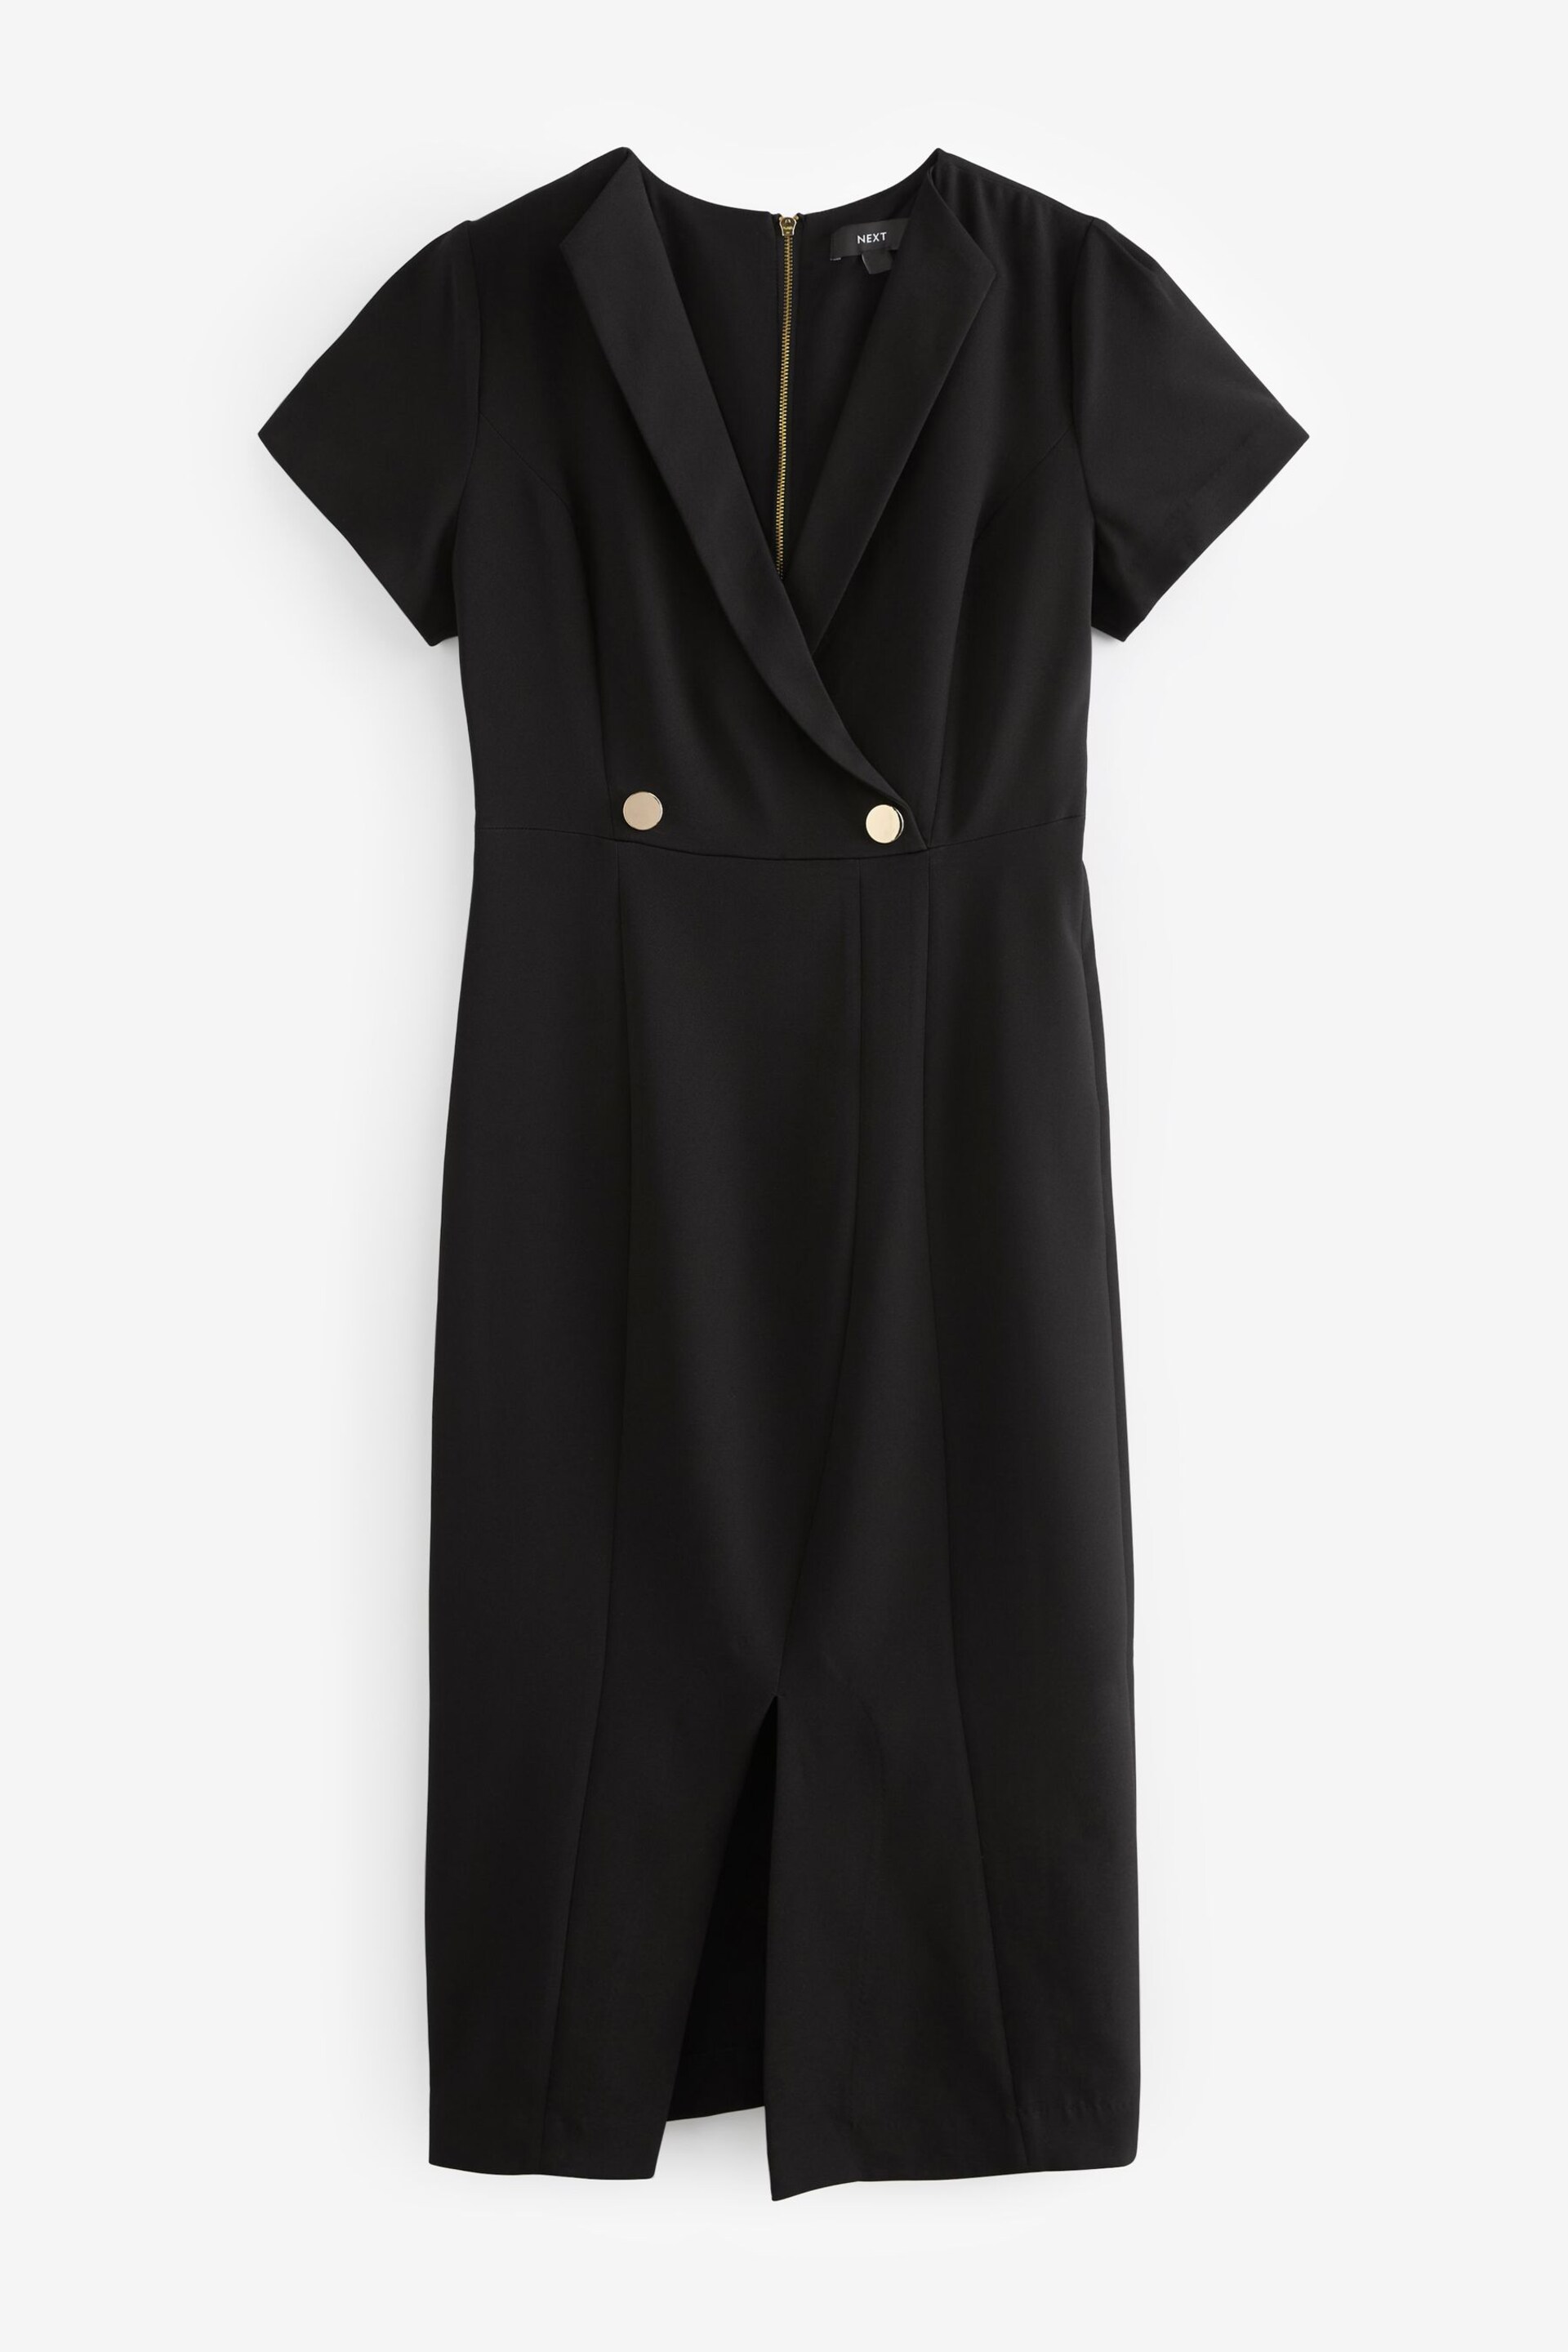 Black Tailored Crepe Midi Dress - Image 5 of 5